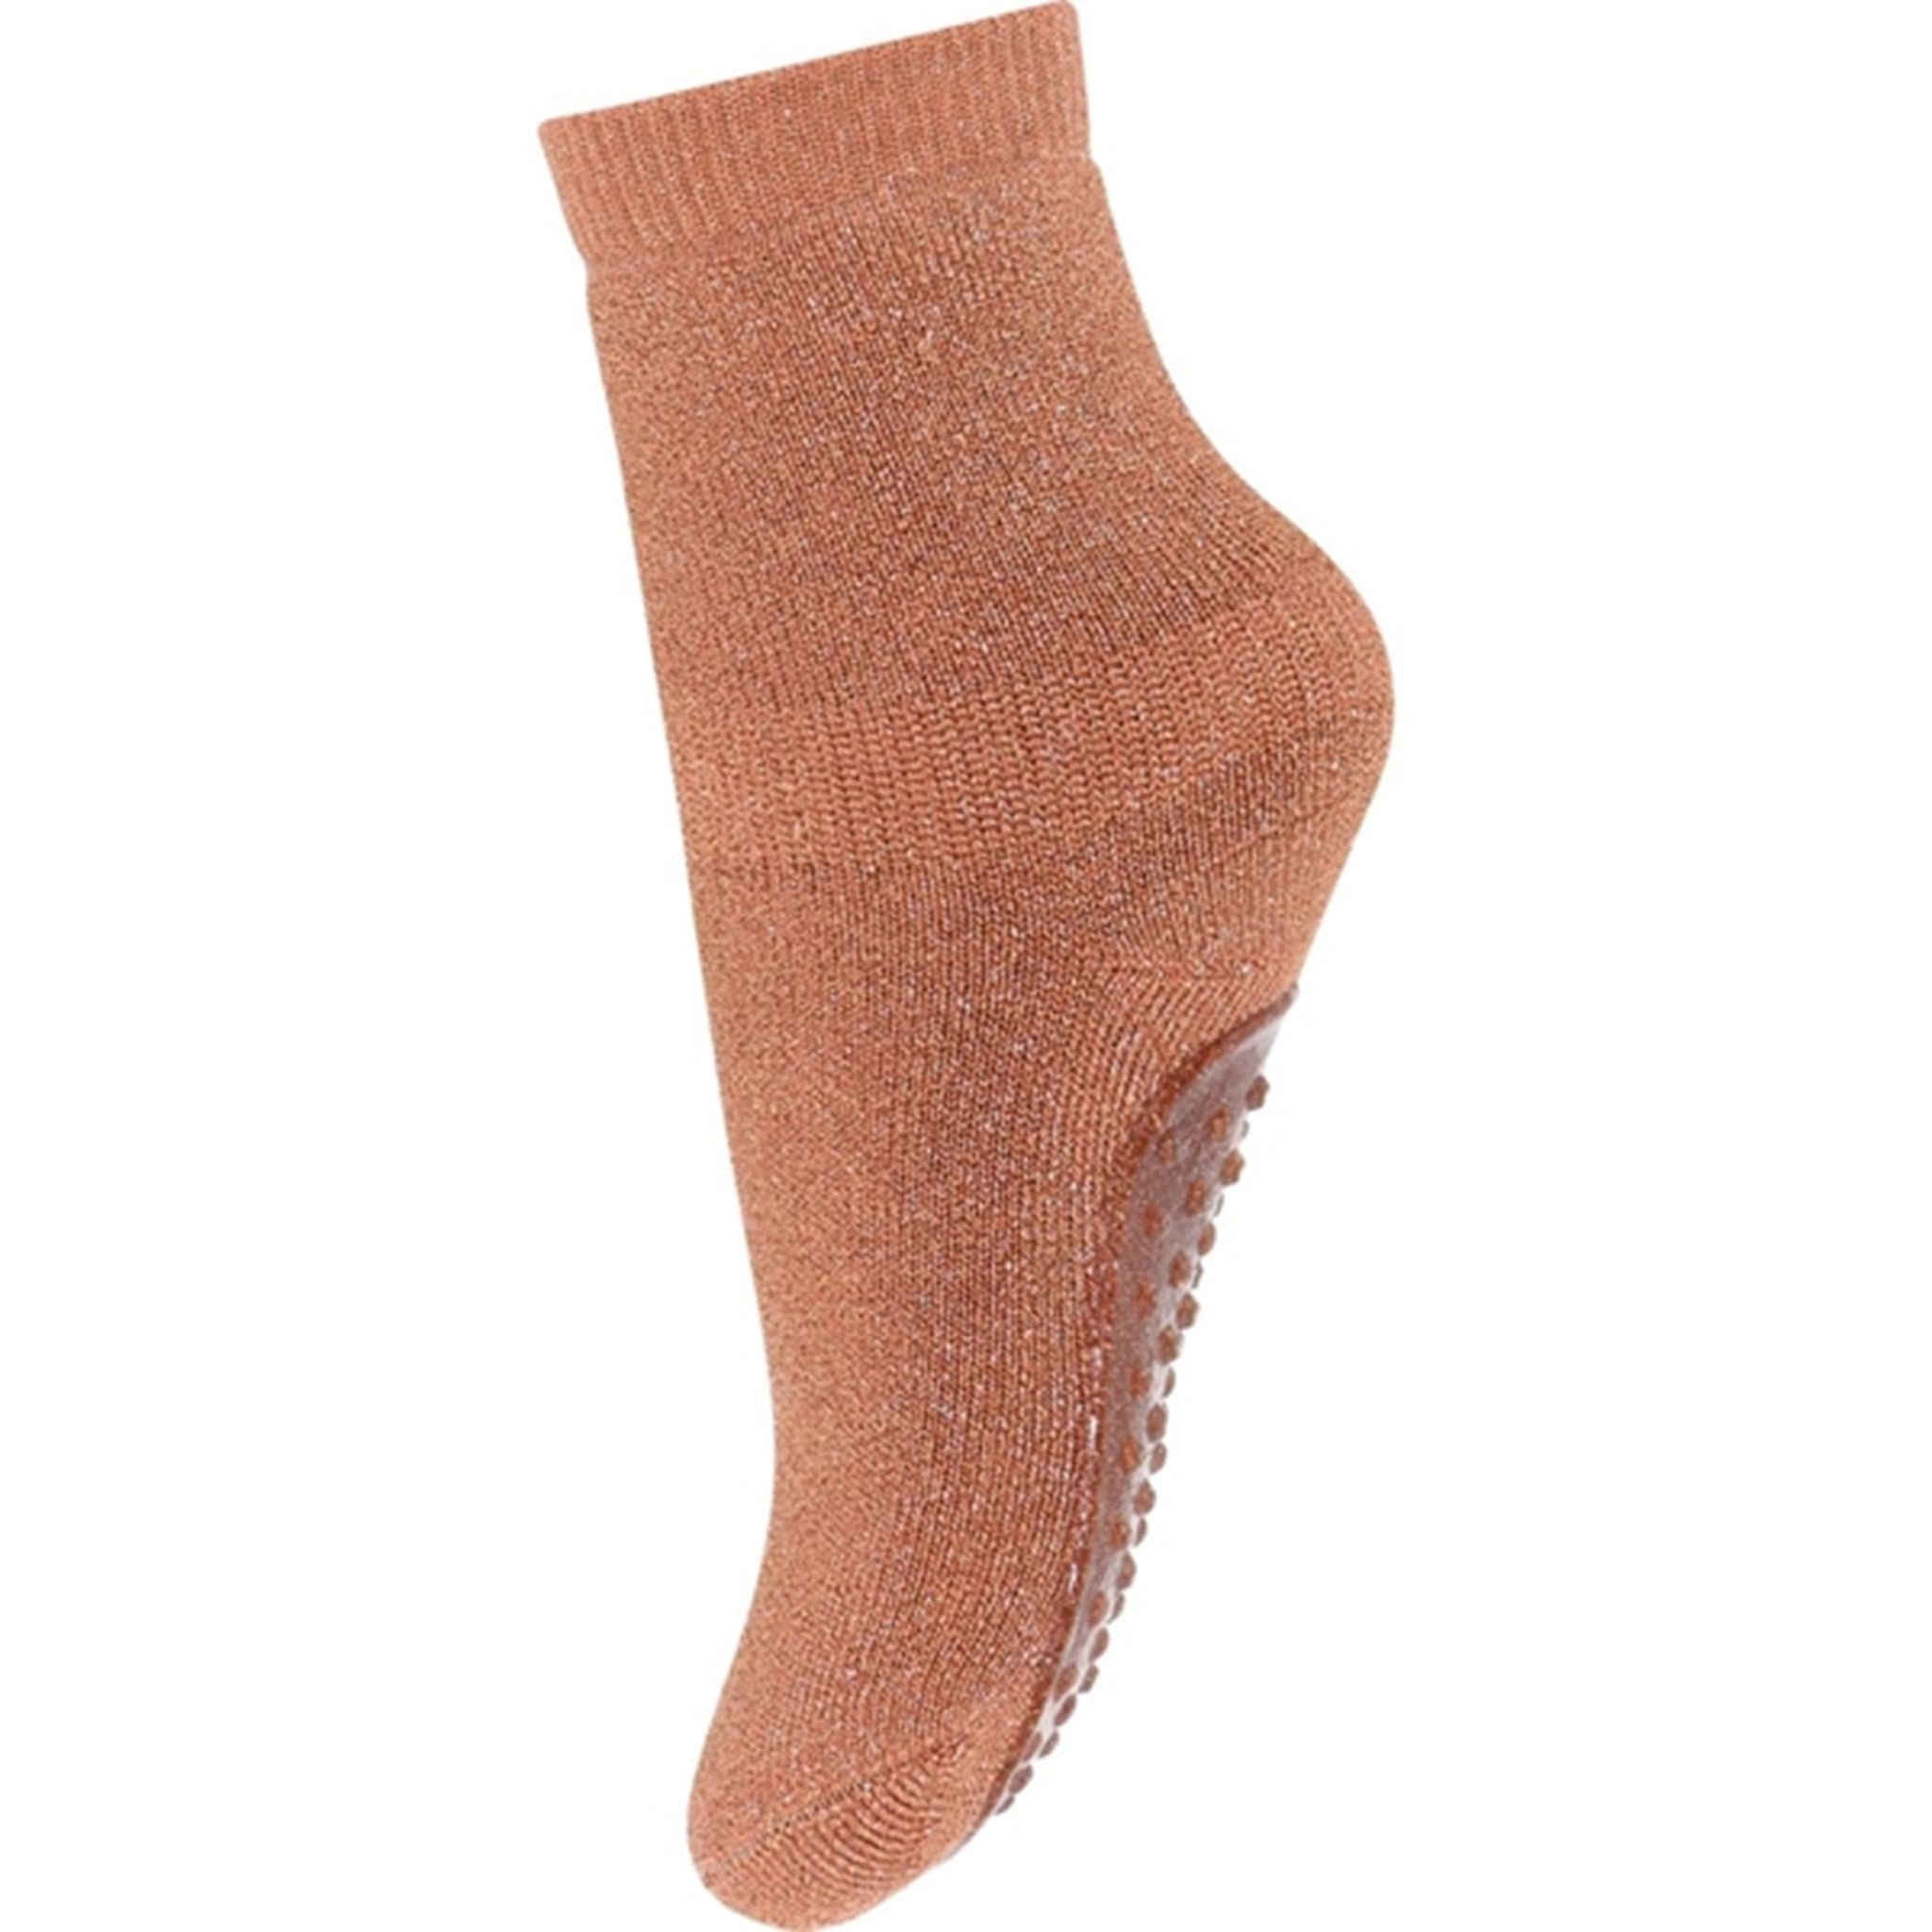 MP 79208 Celina Socks With Anti-Slip 2315 Metallic Glitter Copper Brown